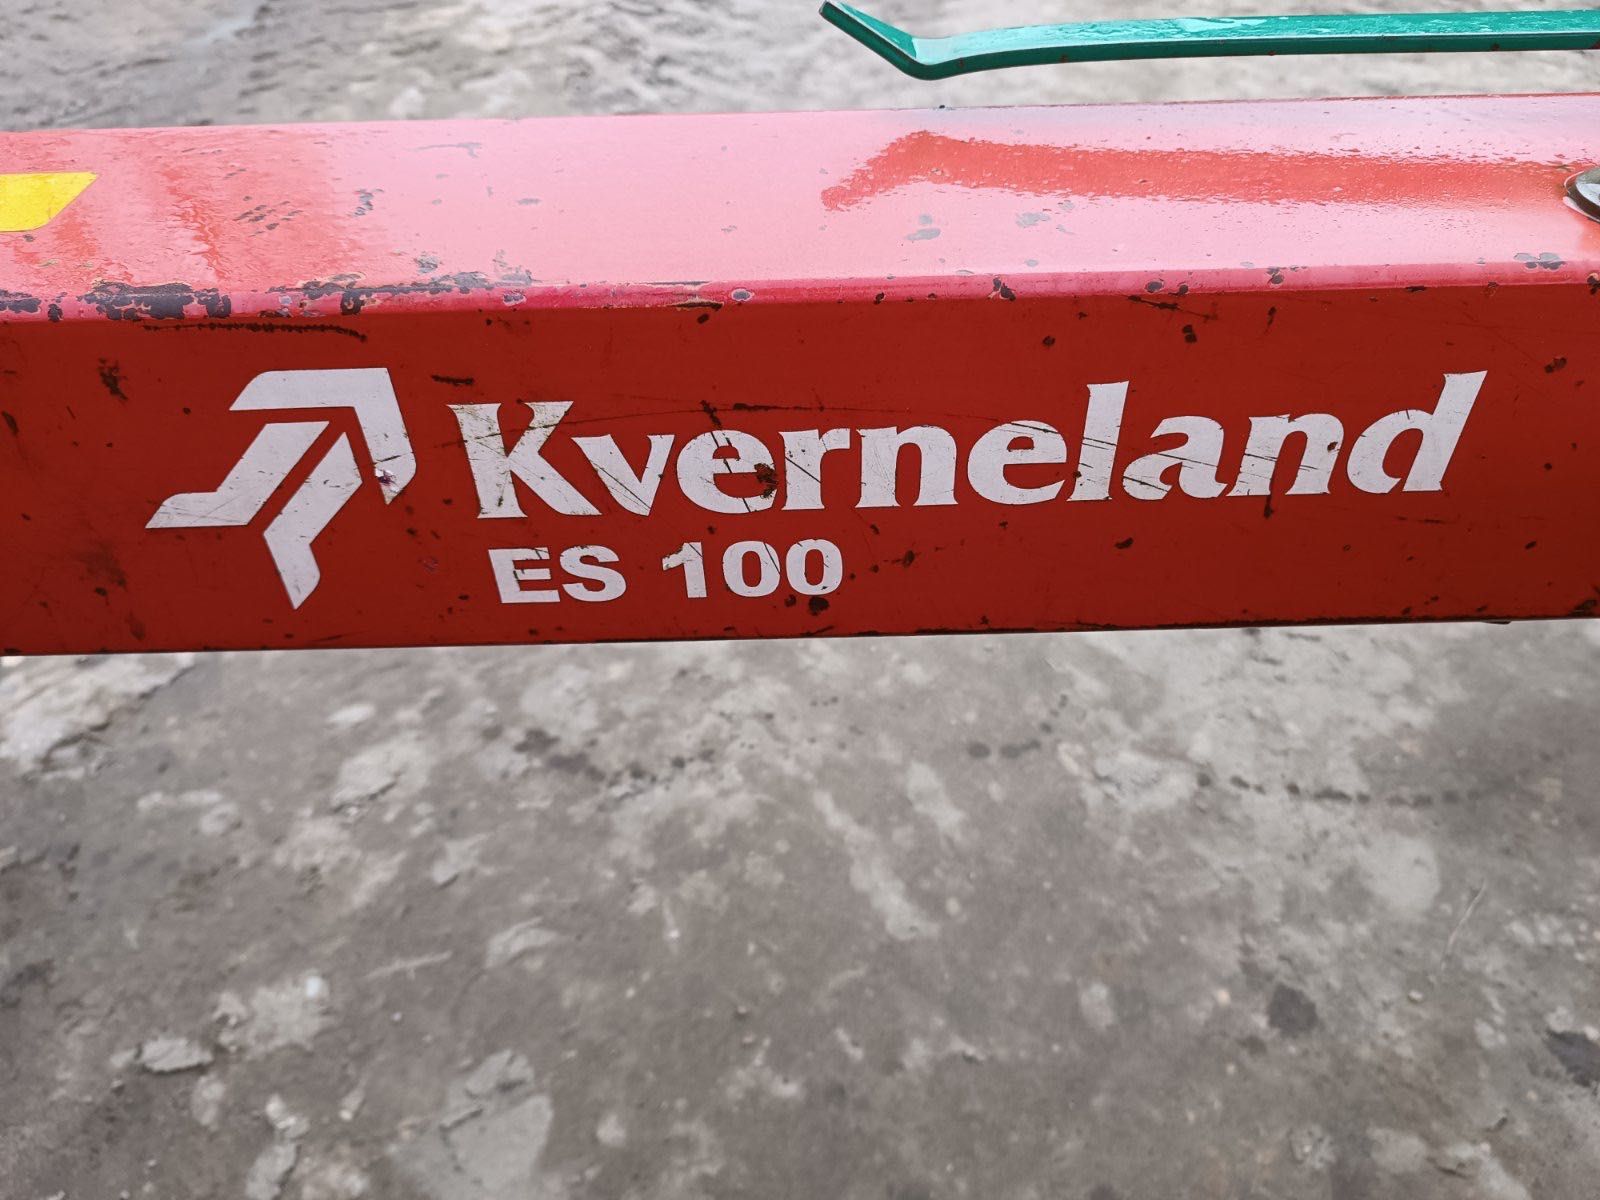 Plug kverneland 4 skibowy vario es100 rok 2015